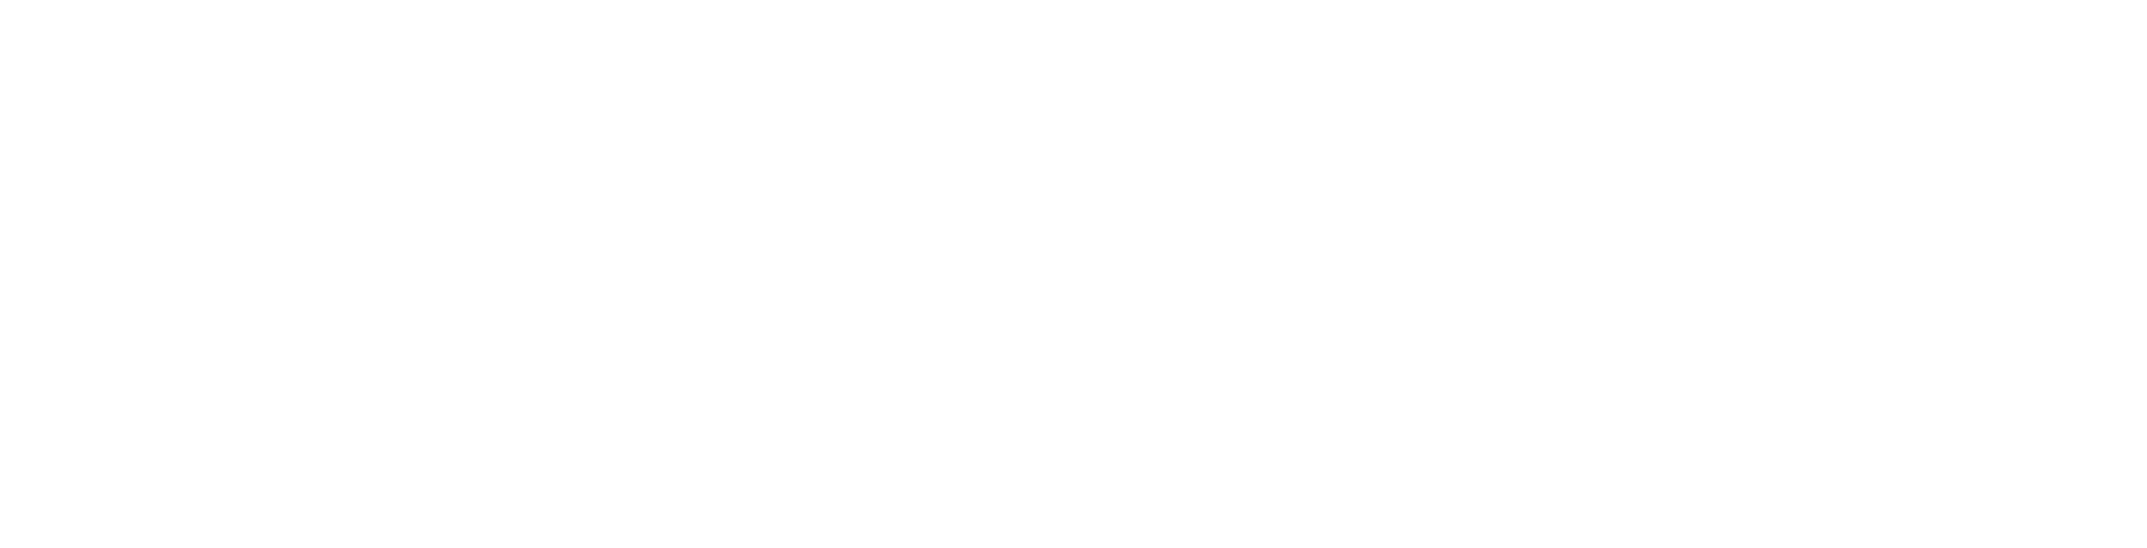 CobbleStone Contract Management Software